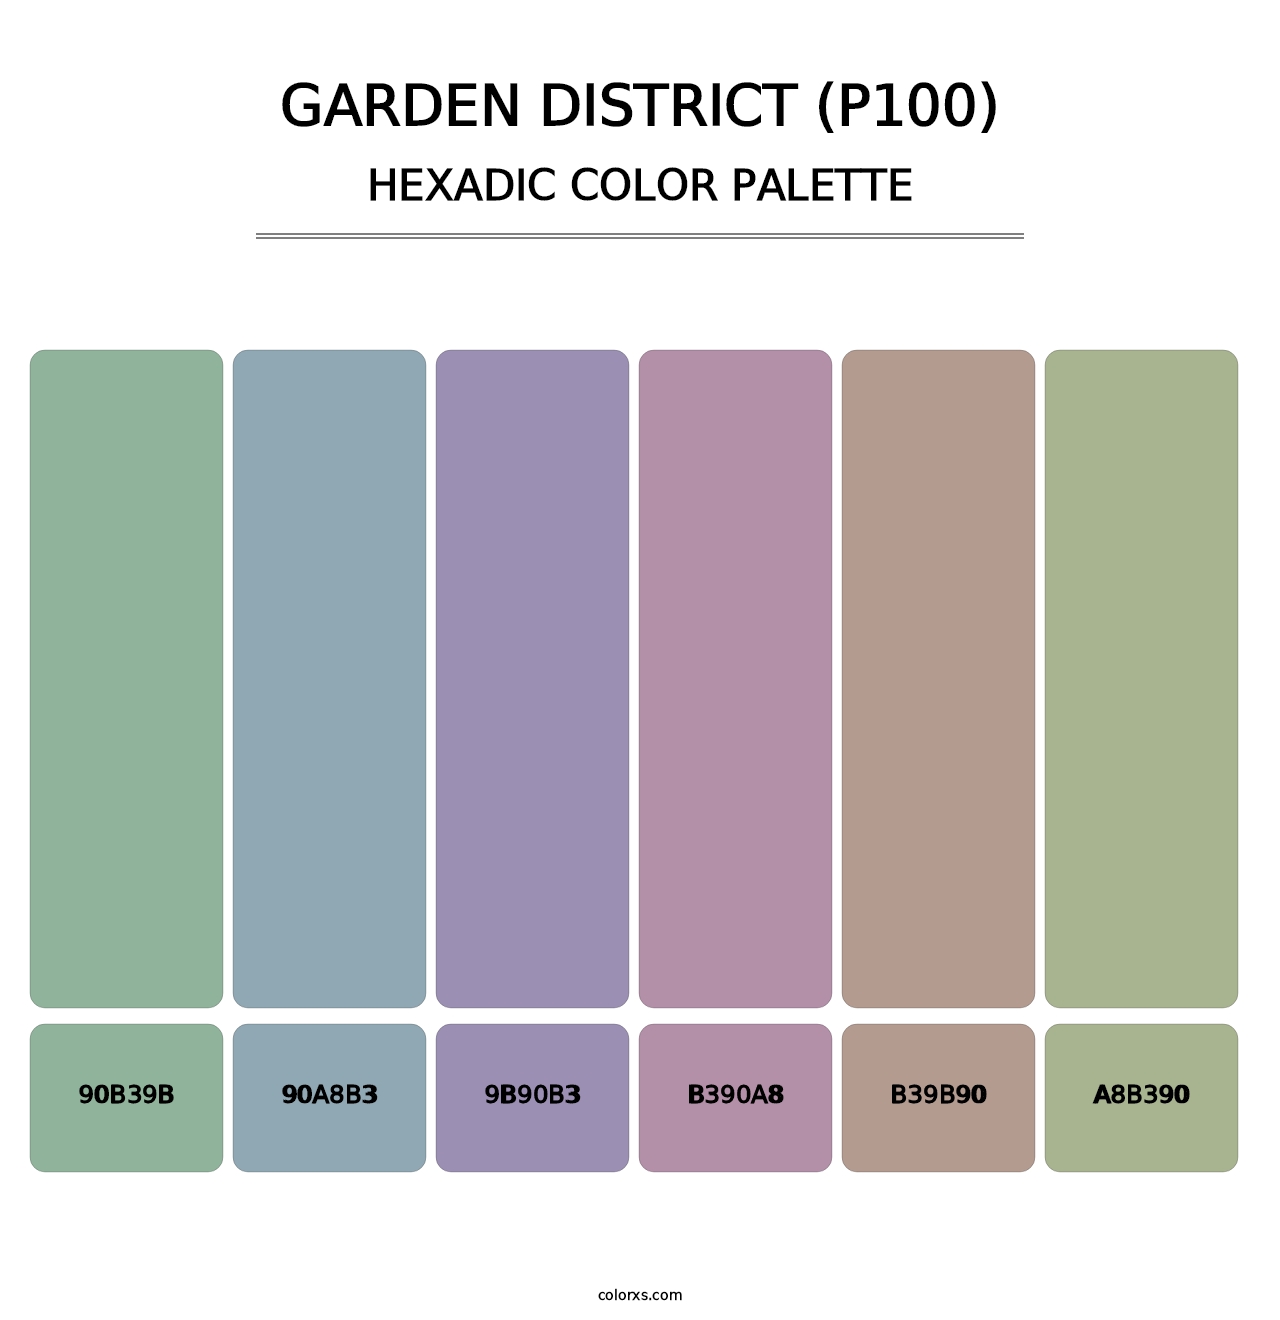 Garden District (P100) - Hexadic Color Palette